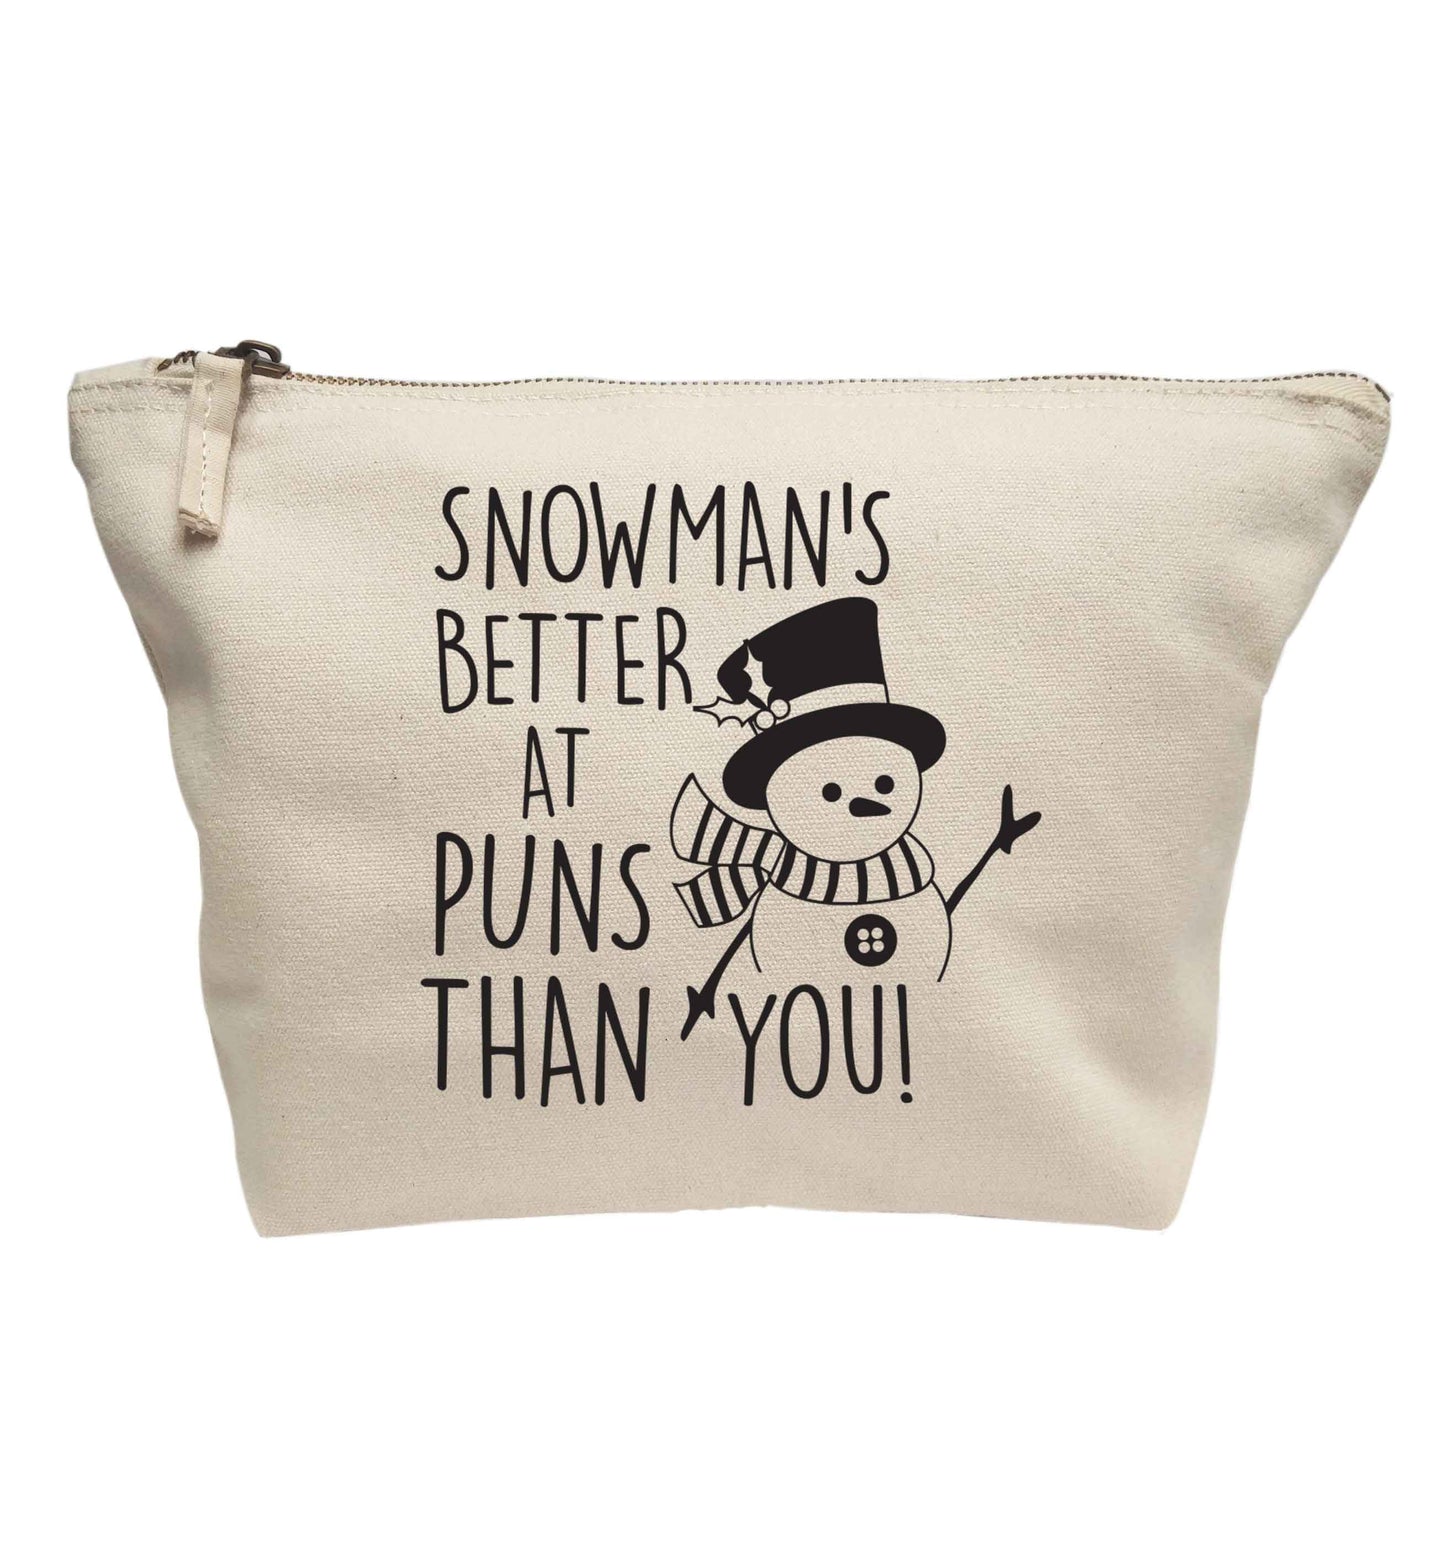 Snowman's better at puns than you | Makeup / wash bag